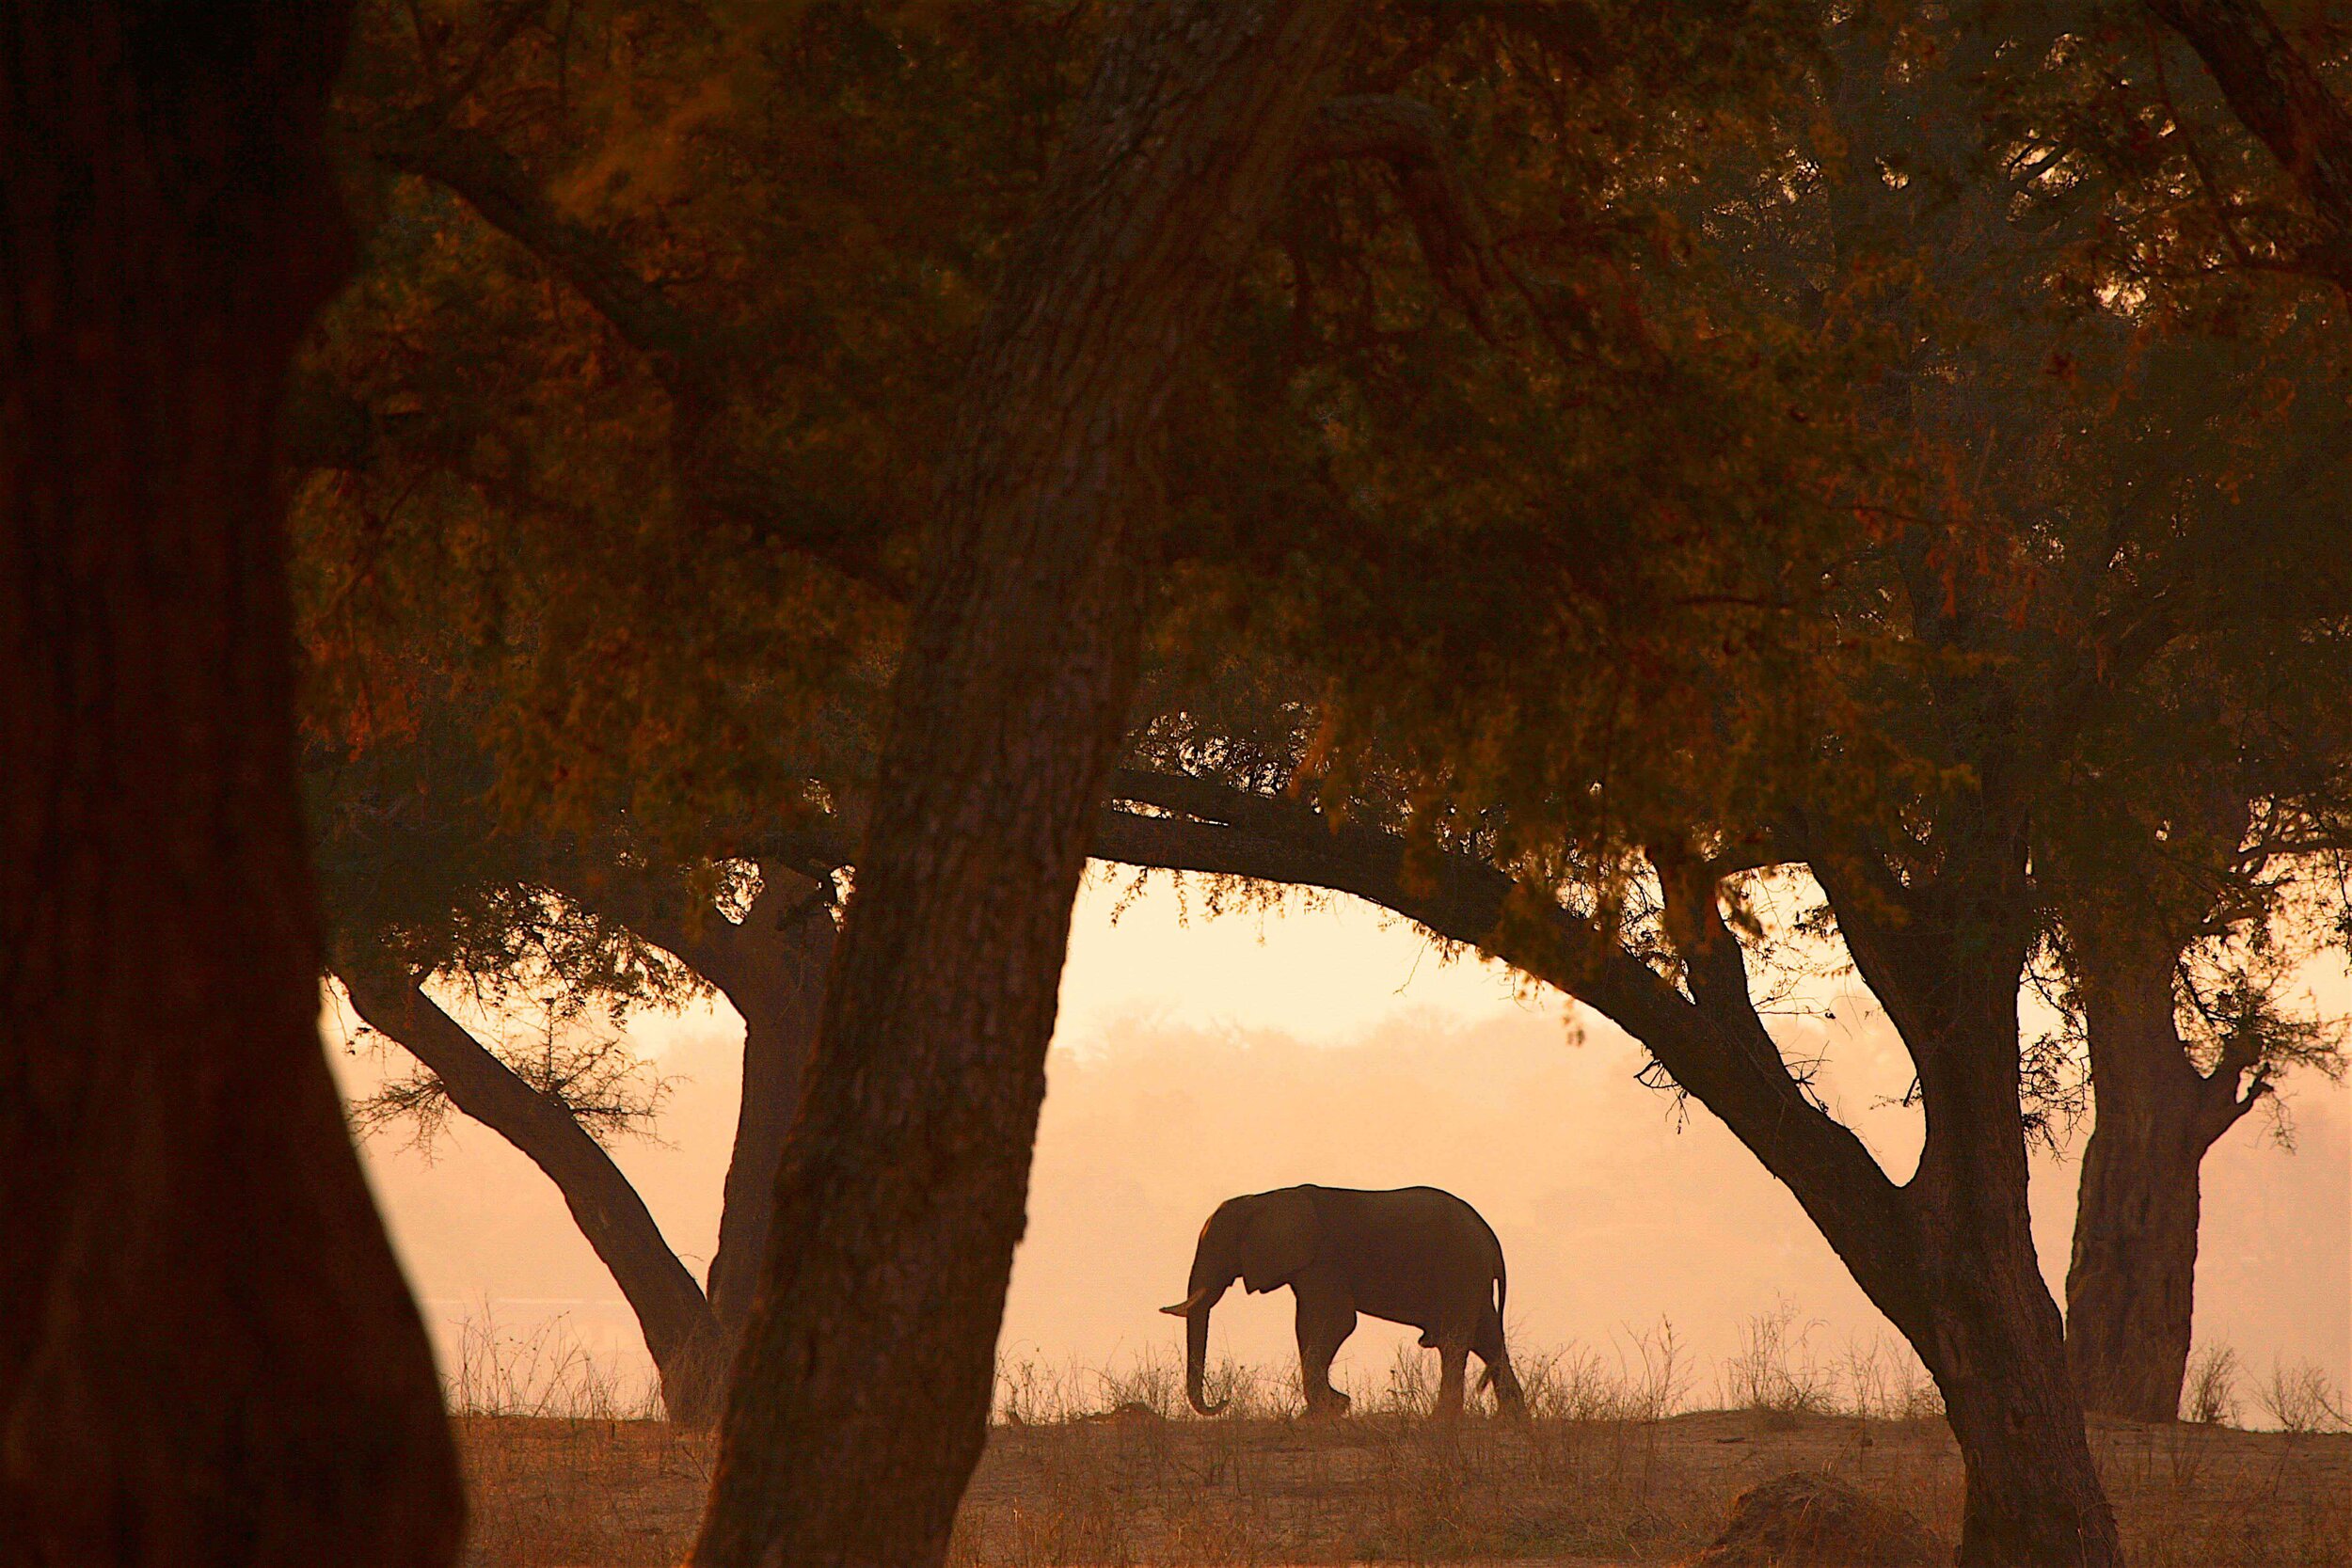 Discover Elephant Behaviour — Wild Survivors